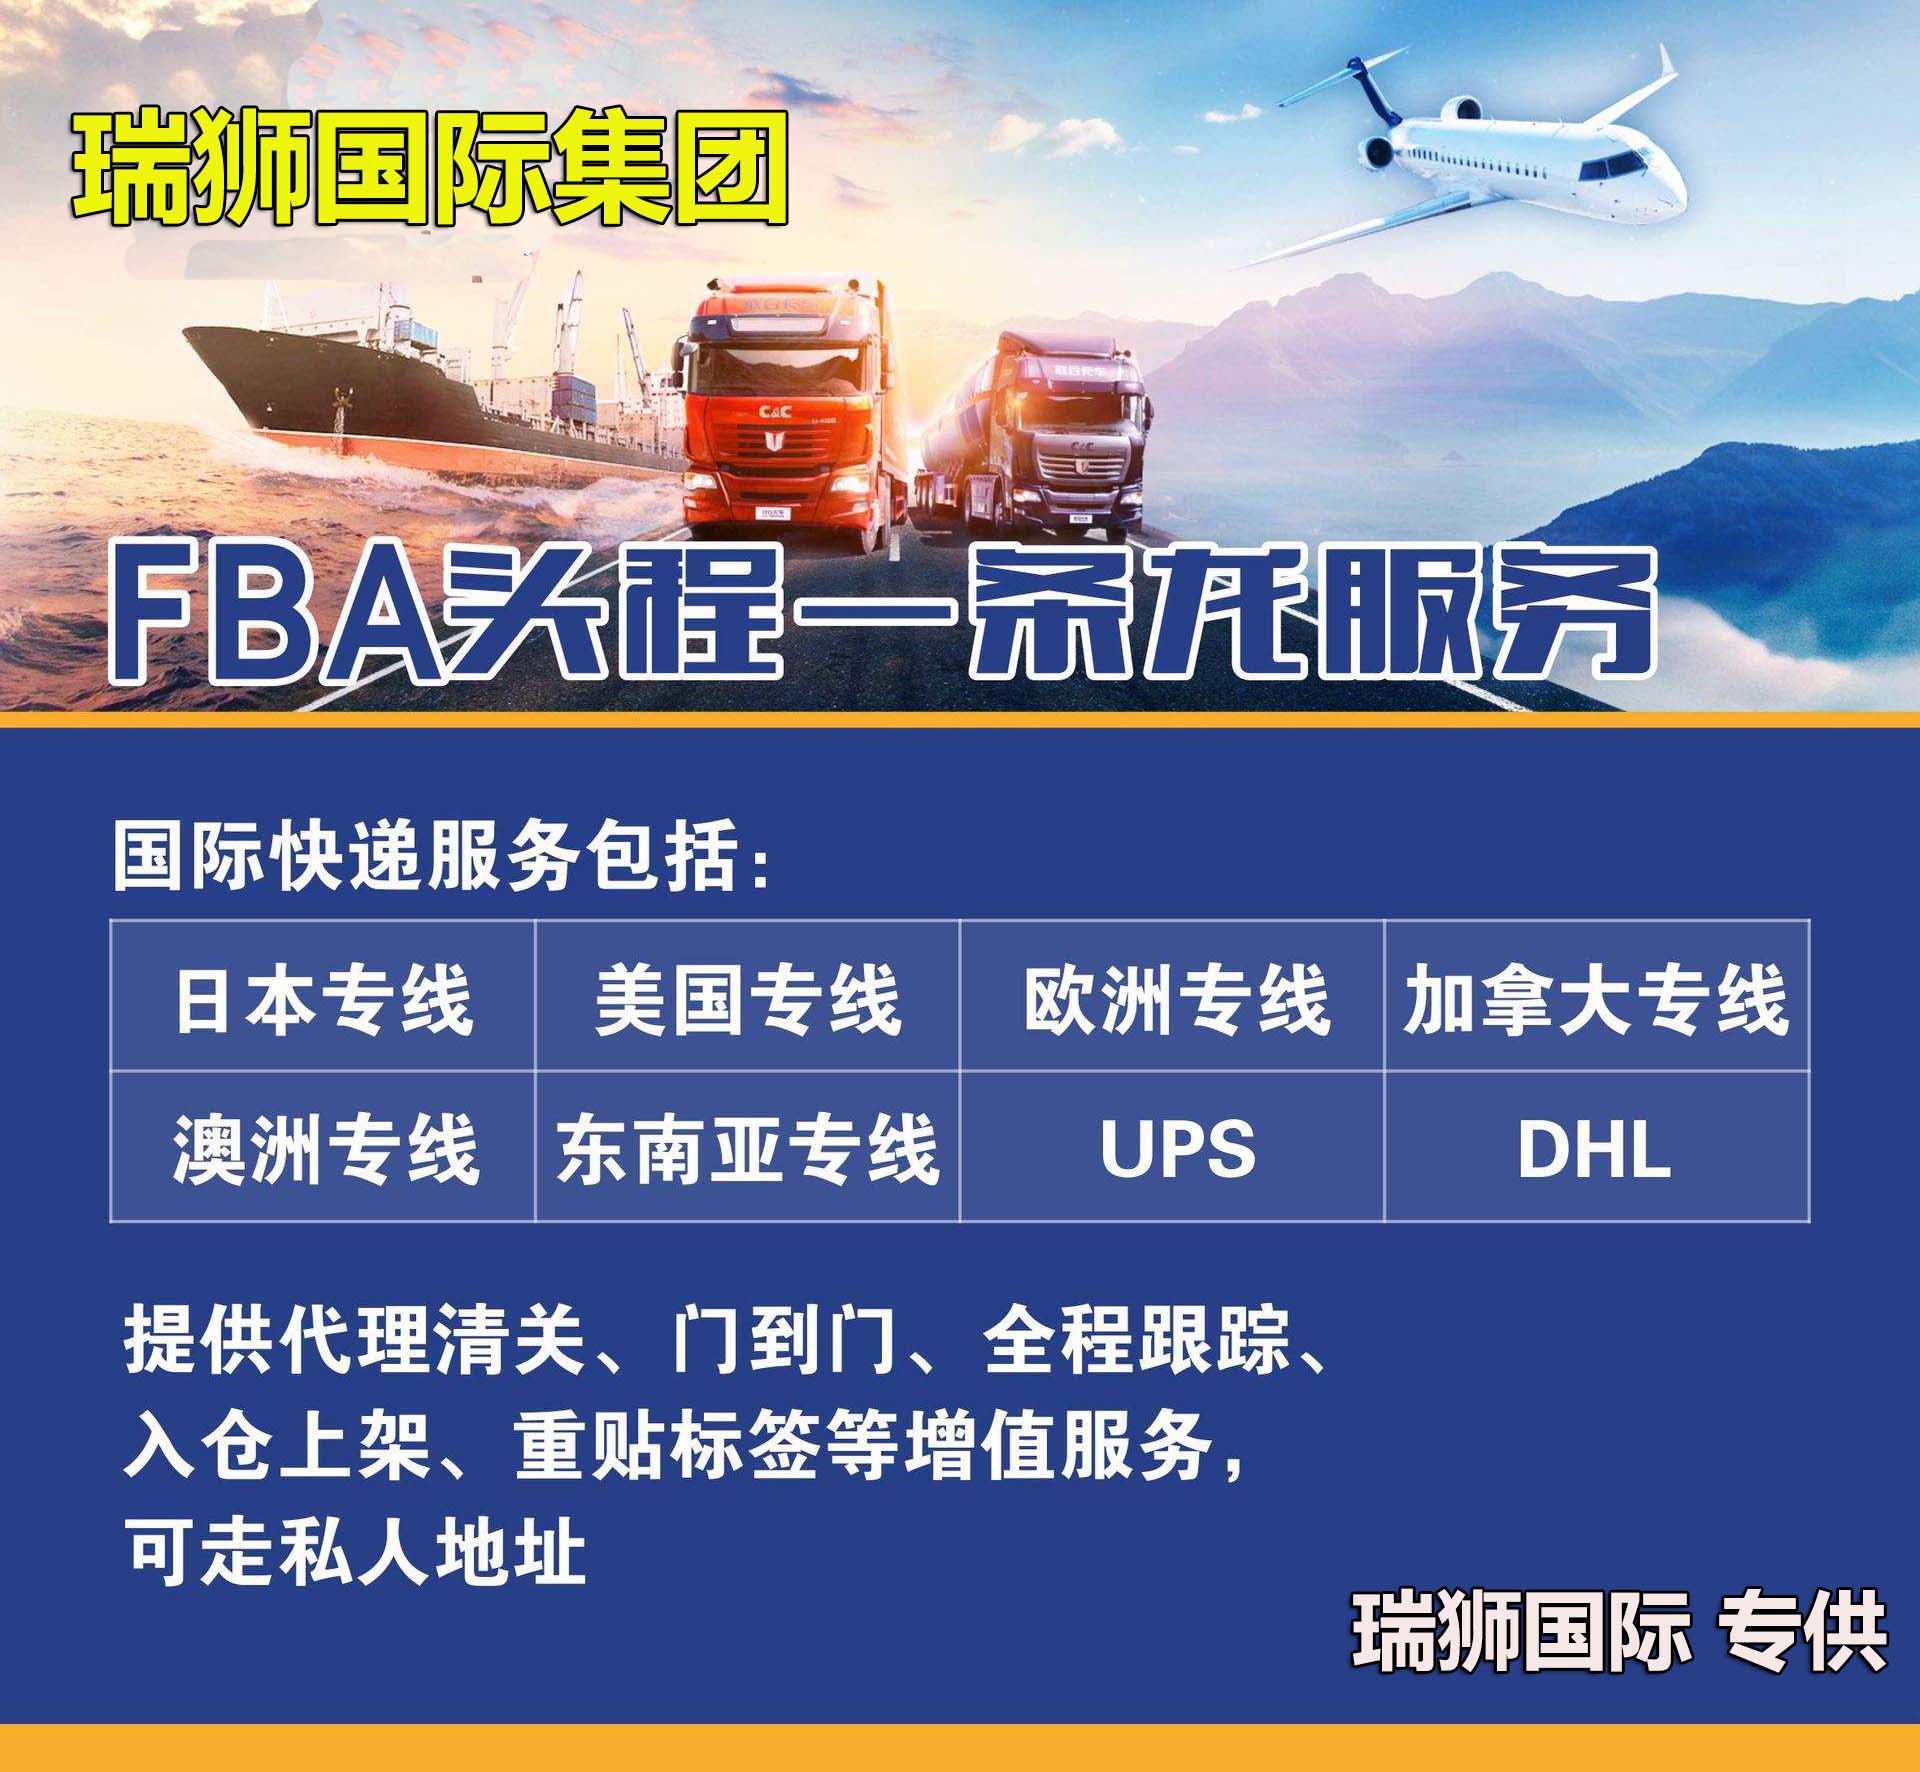 港龙航空有限公司 KA航空 港龙航空 Dragonair Hong Kong Dragon Airlines Limited 